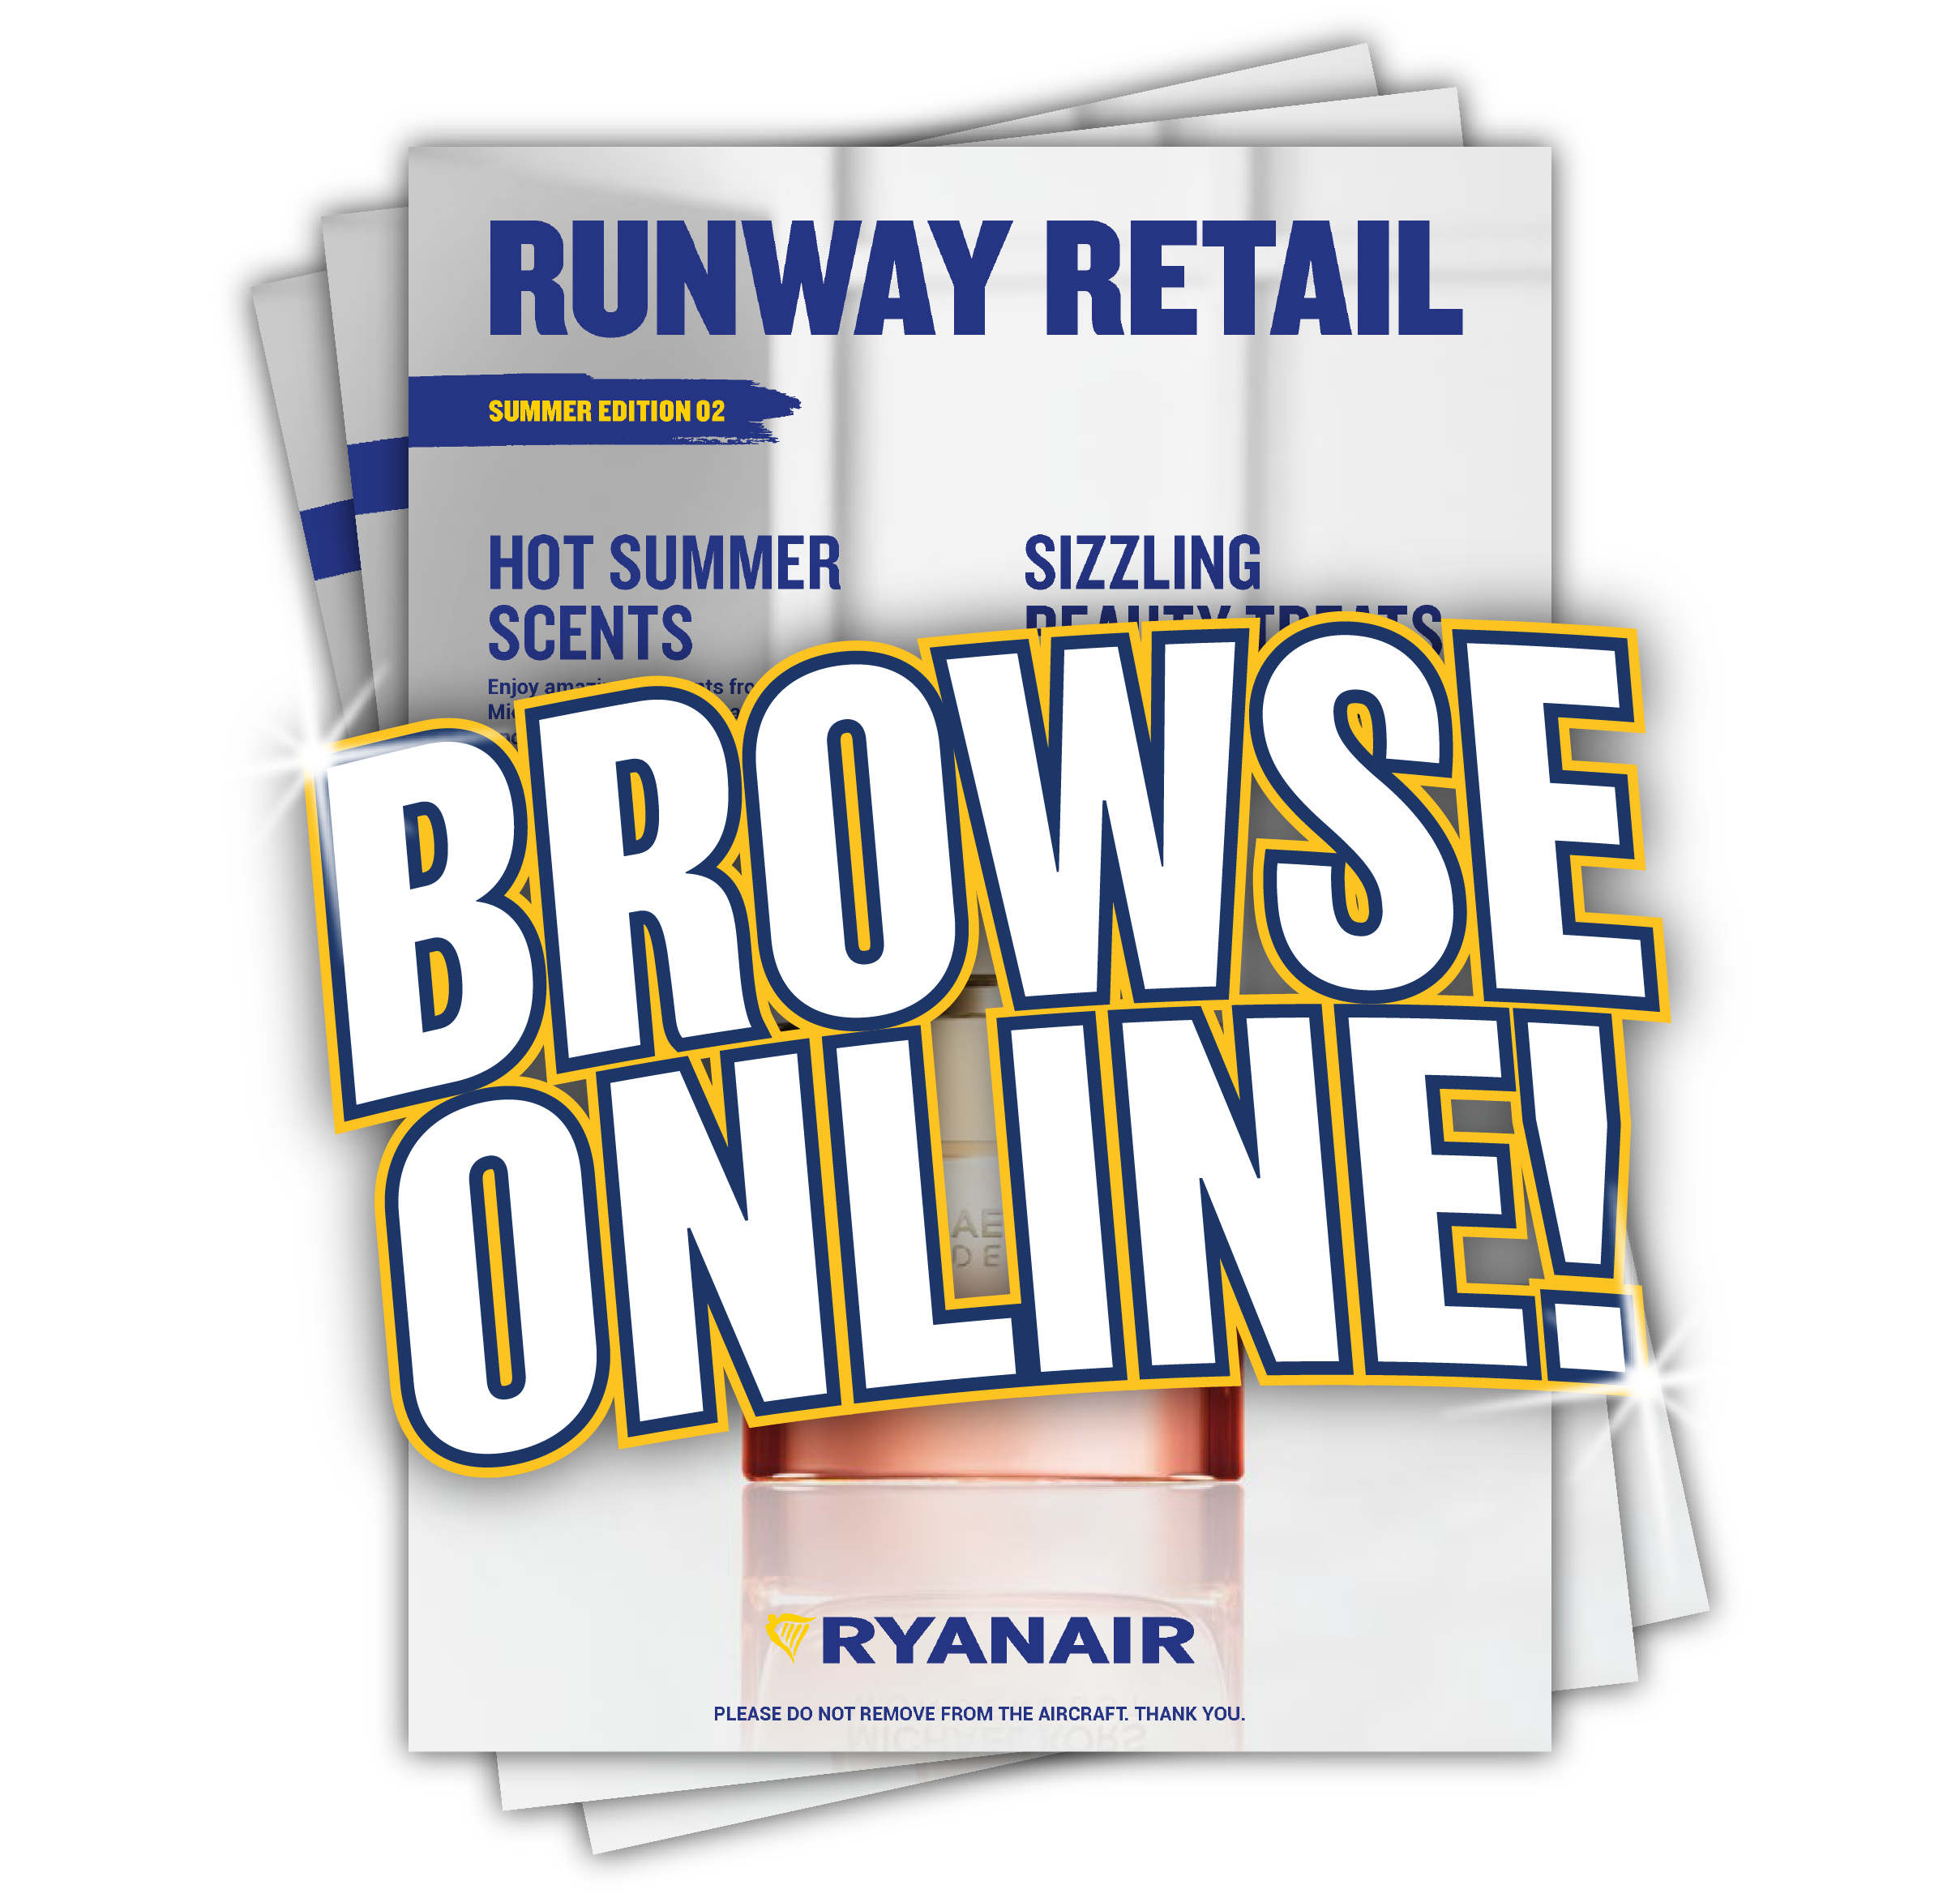 Browse Runway Retail Online!